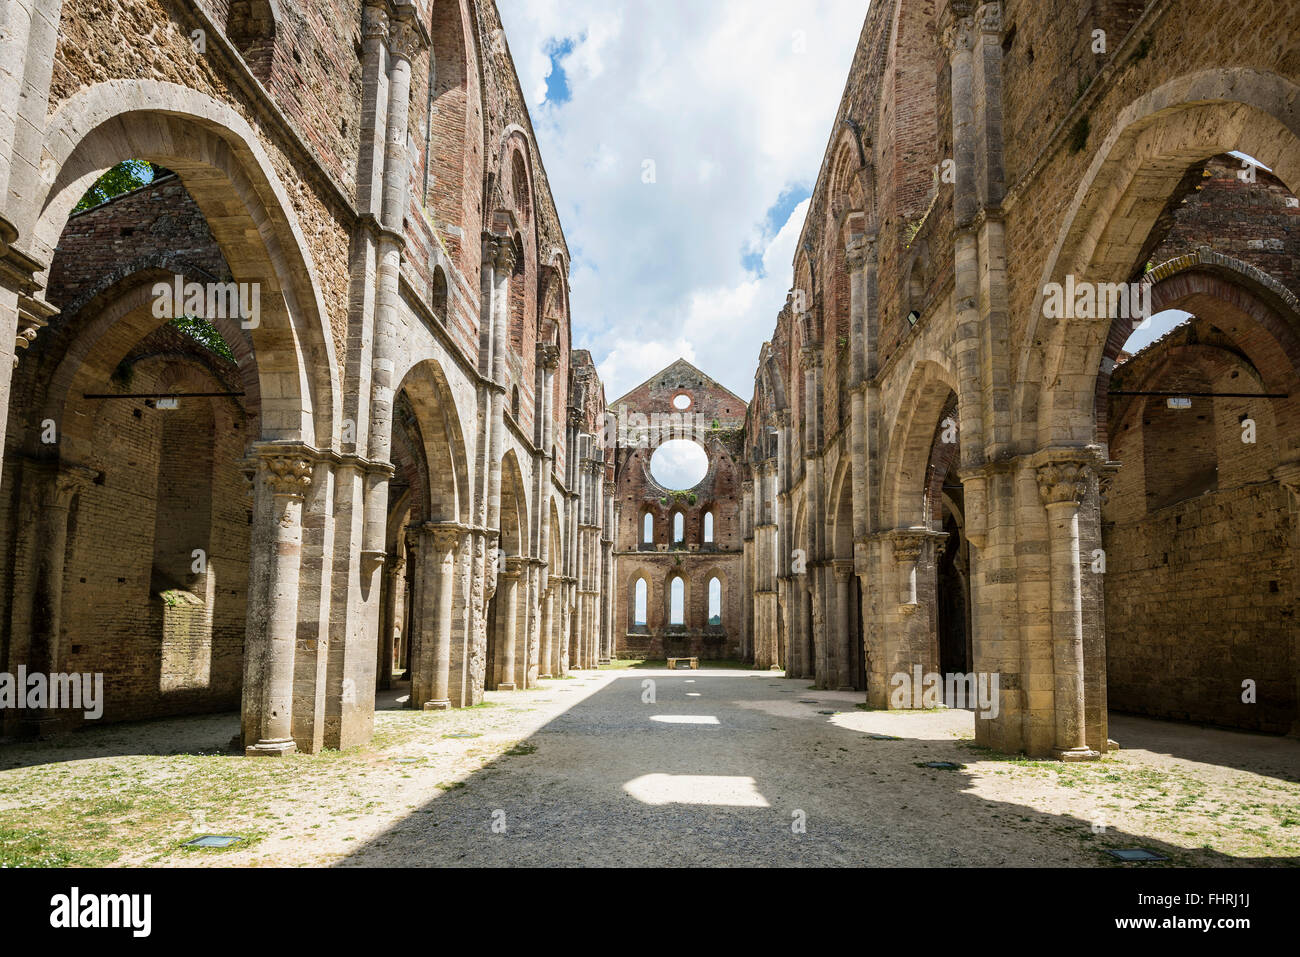 Ruines du monastère cistercien de l'abbaye de Saint Galgano Abbazia di San Galgano, Chiusdino, Province de Sienne, Toscane, Italie Banque D'Images